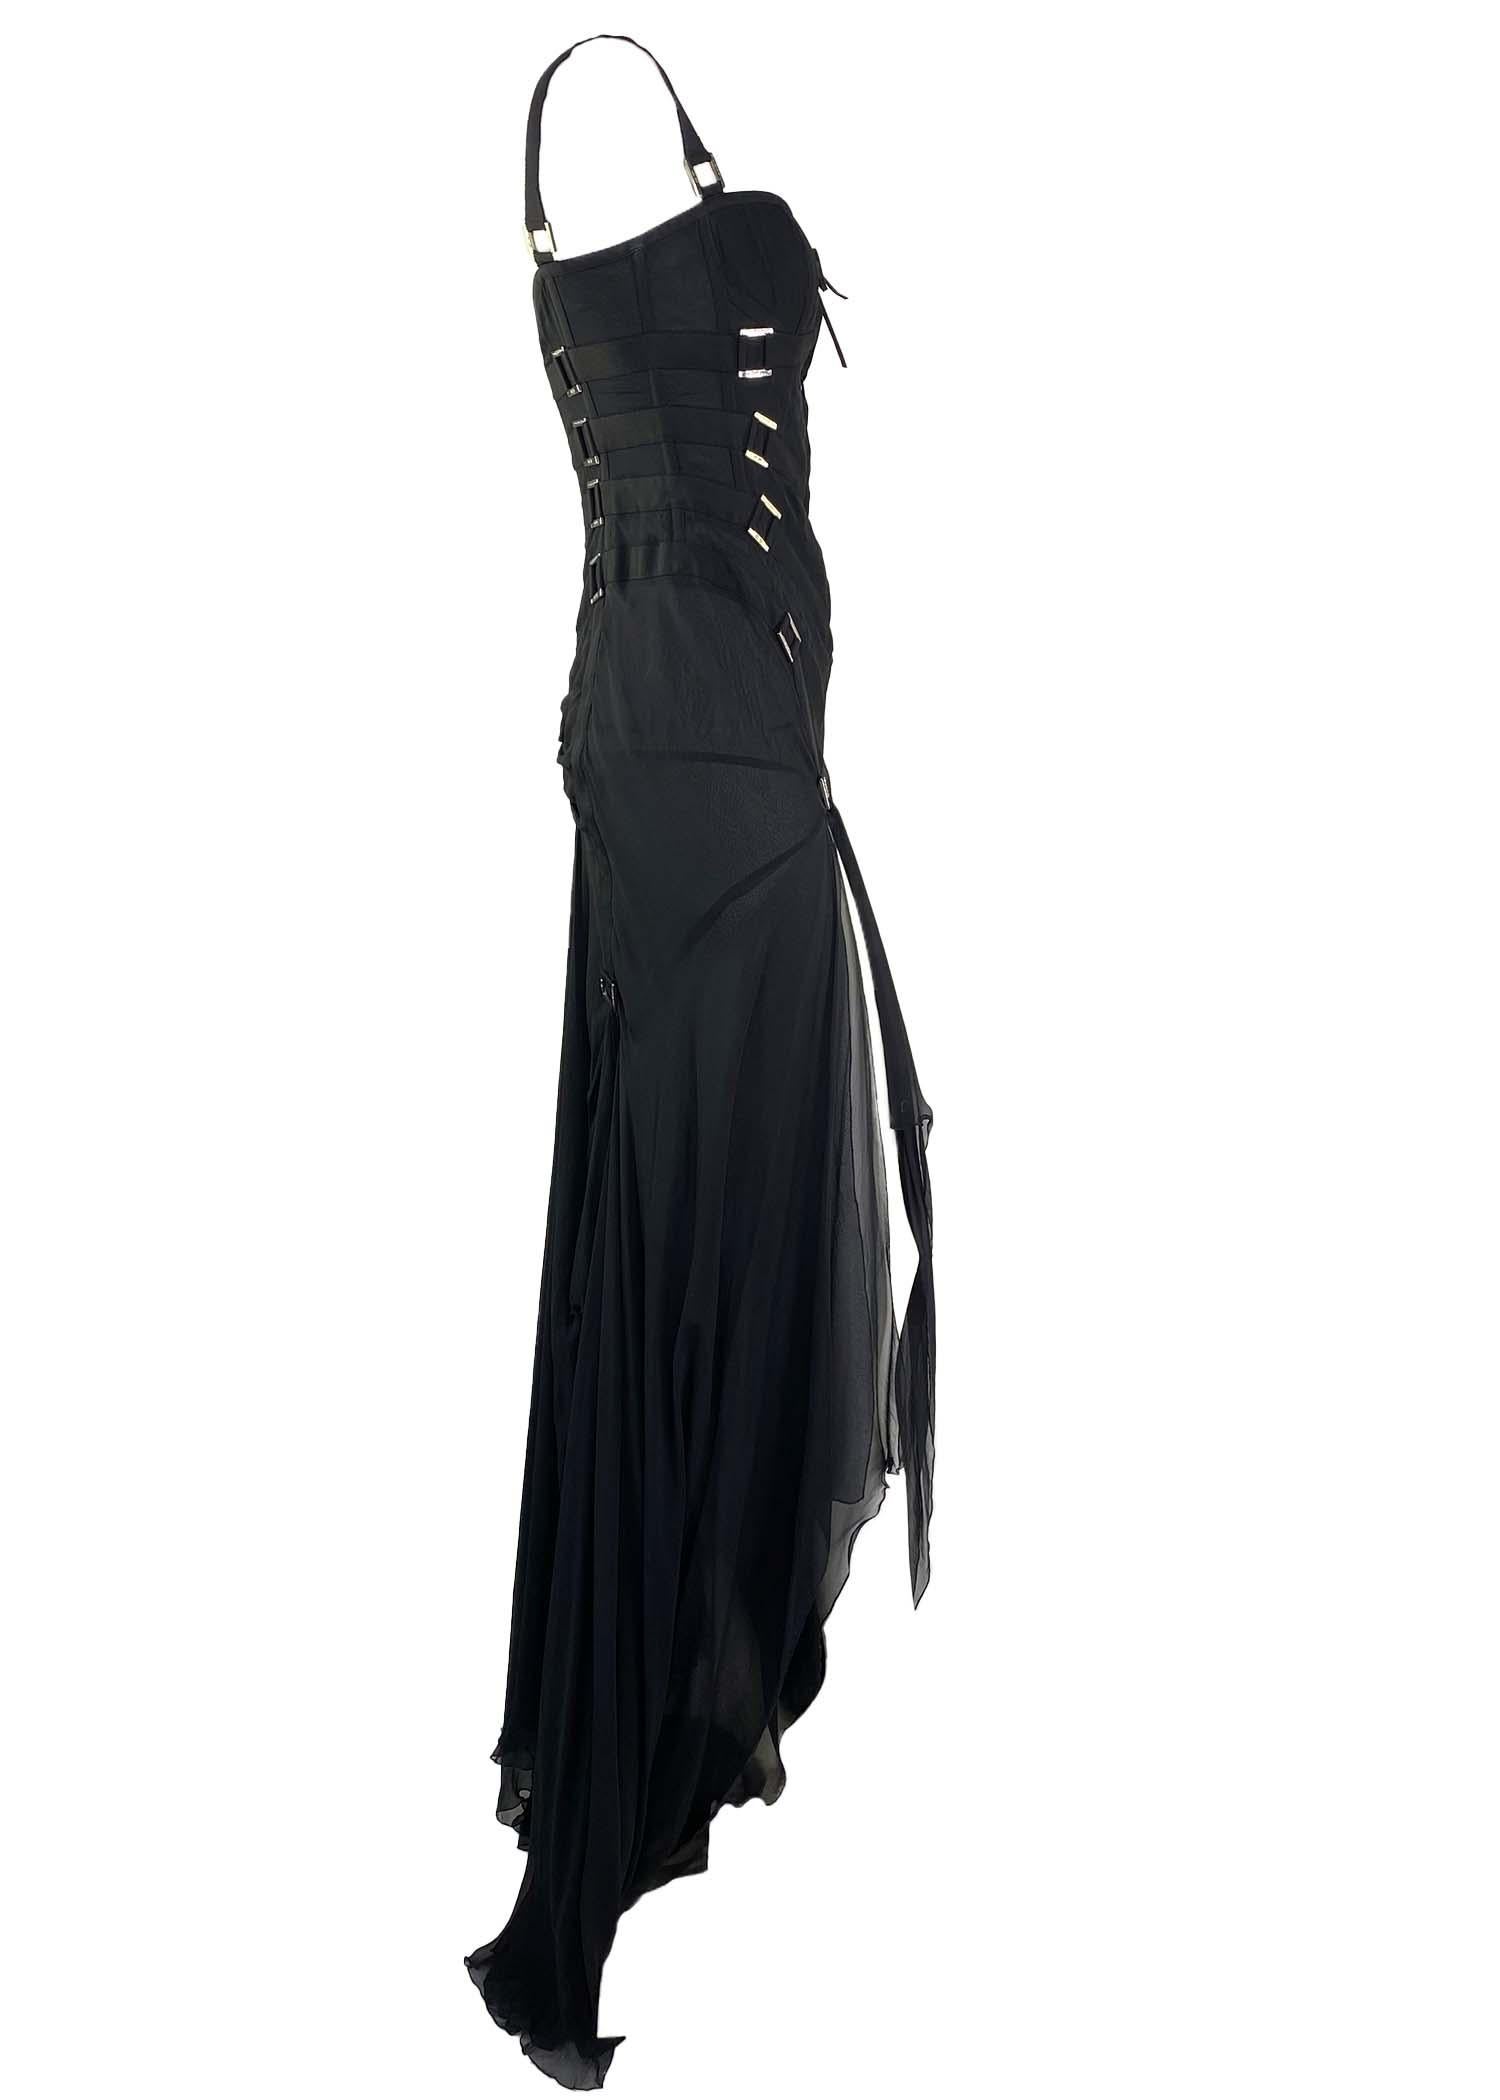 donatella versace black dress